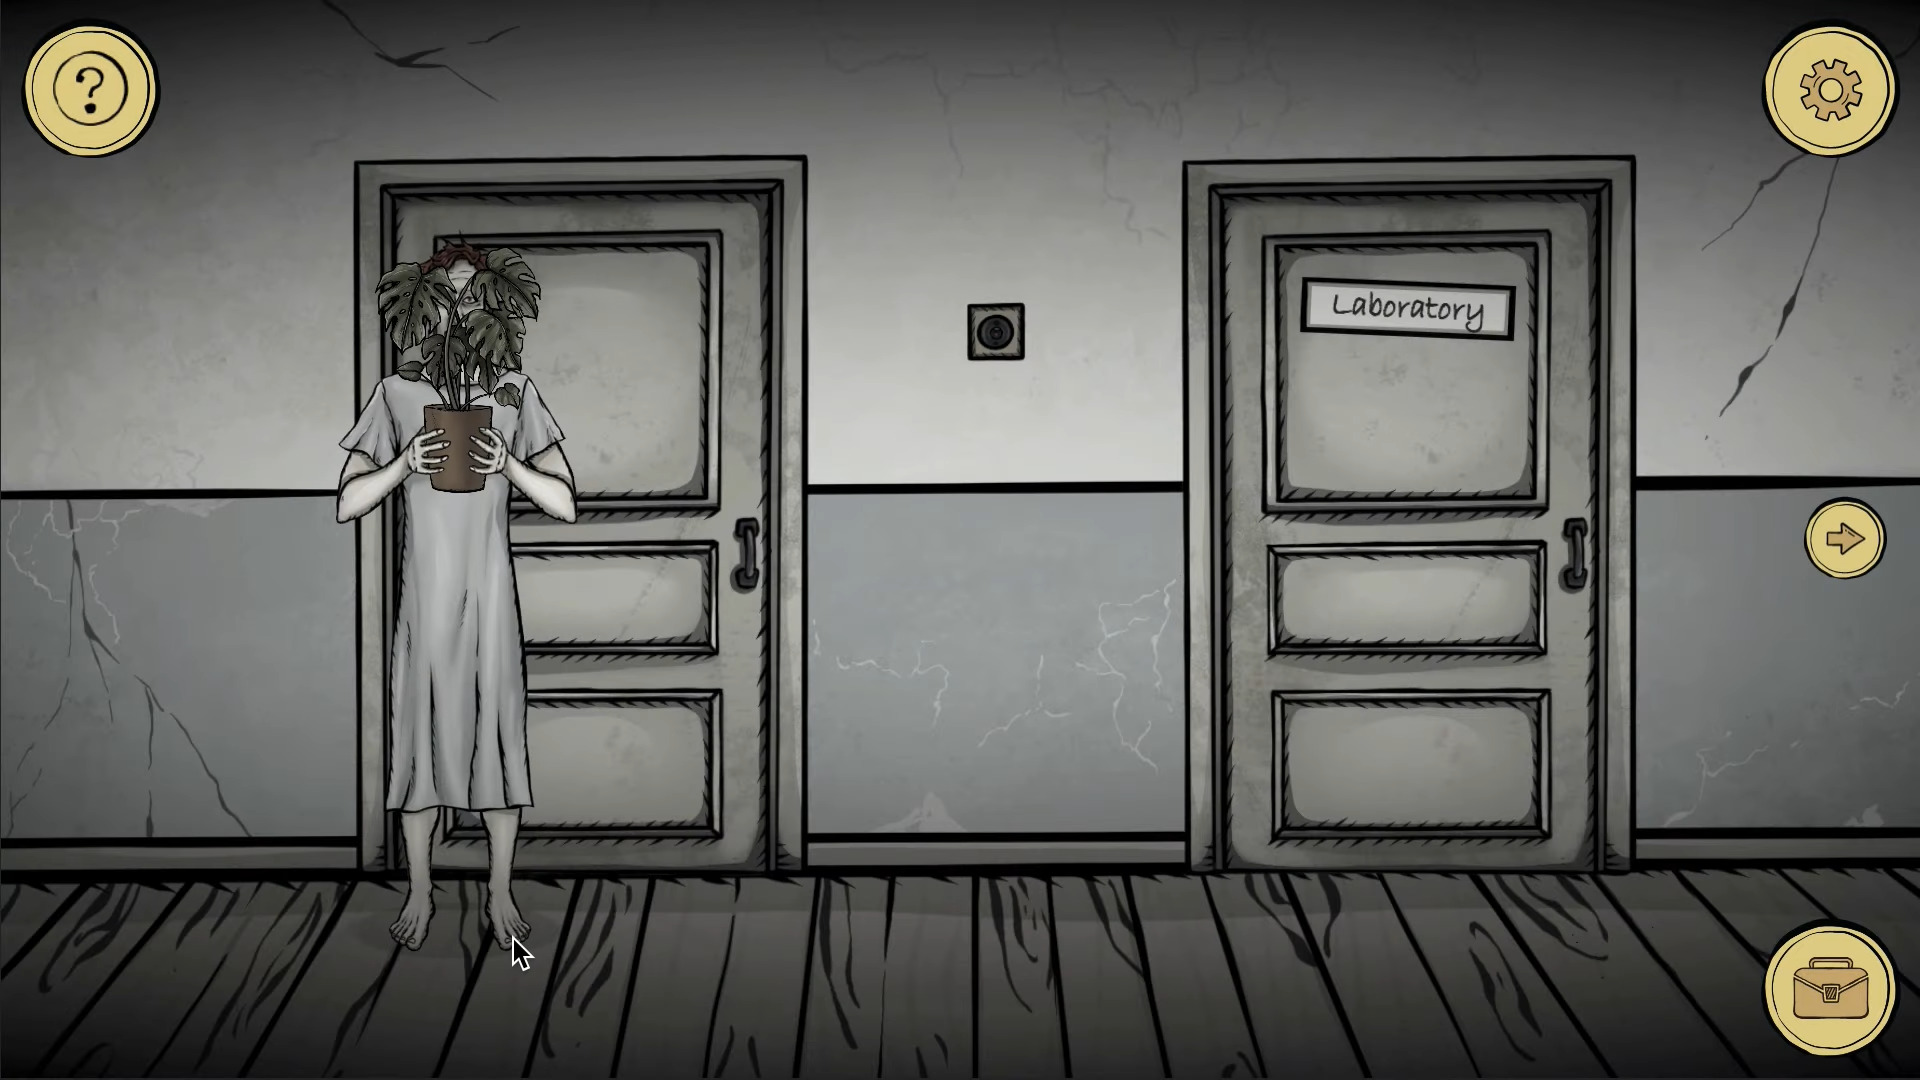 Strange Case 2: Asylum Escape - Android game screenshots.